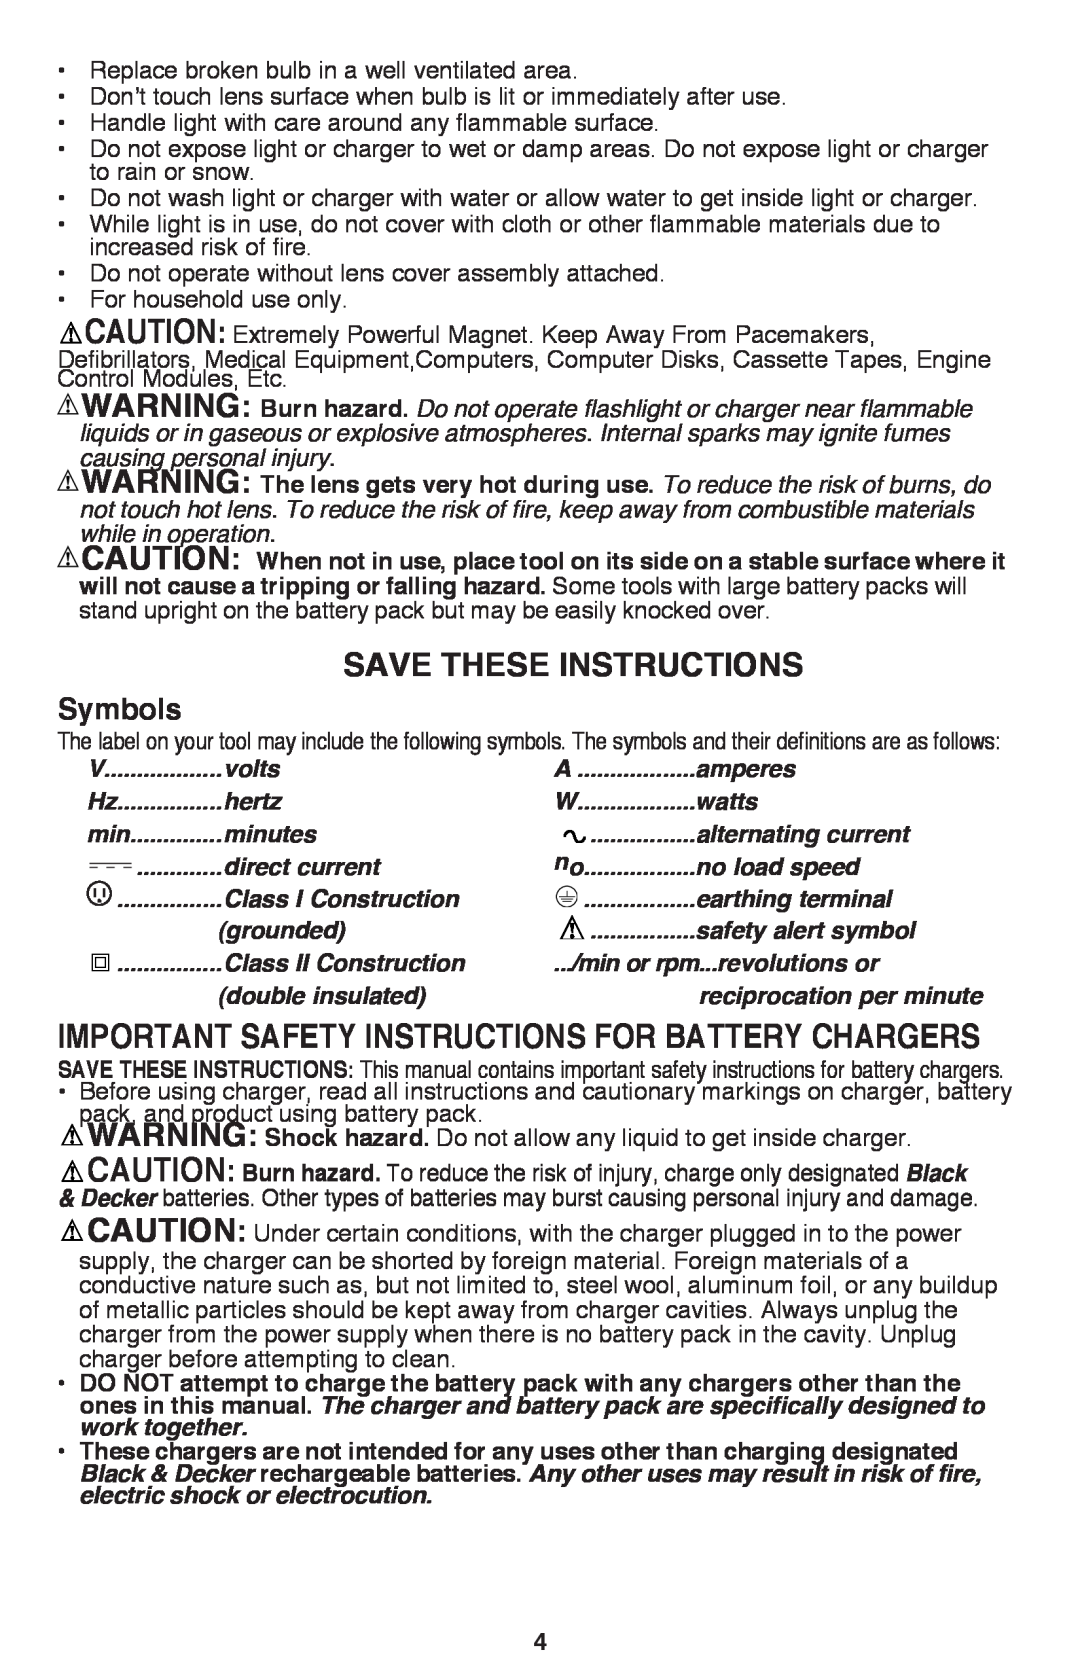 Black & Decker BDCF20, BDCF12 manual save these instructions, Symbols 